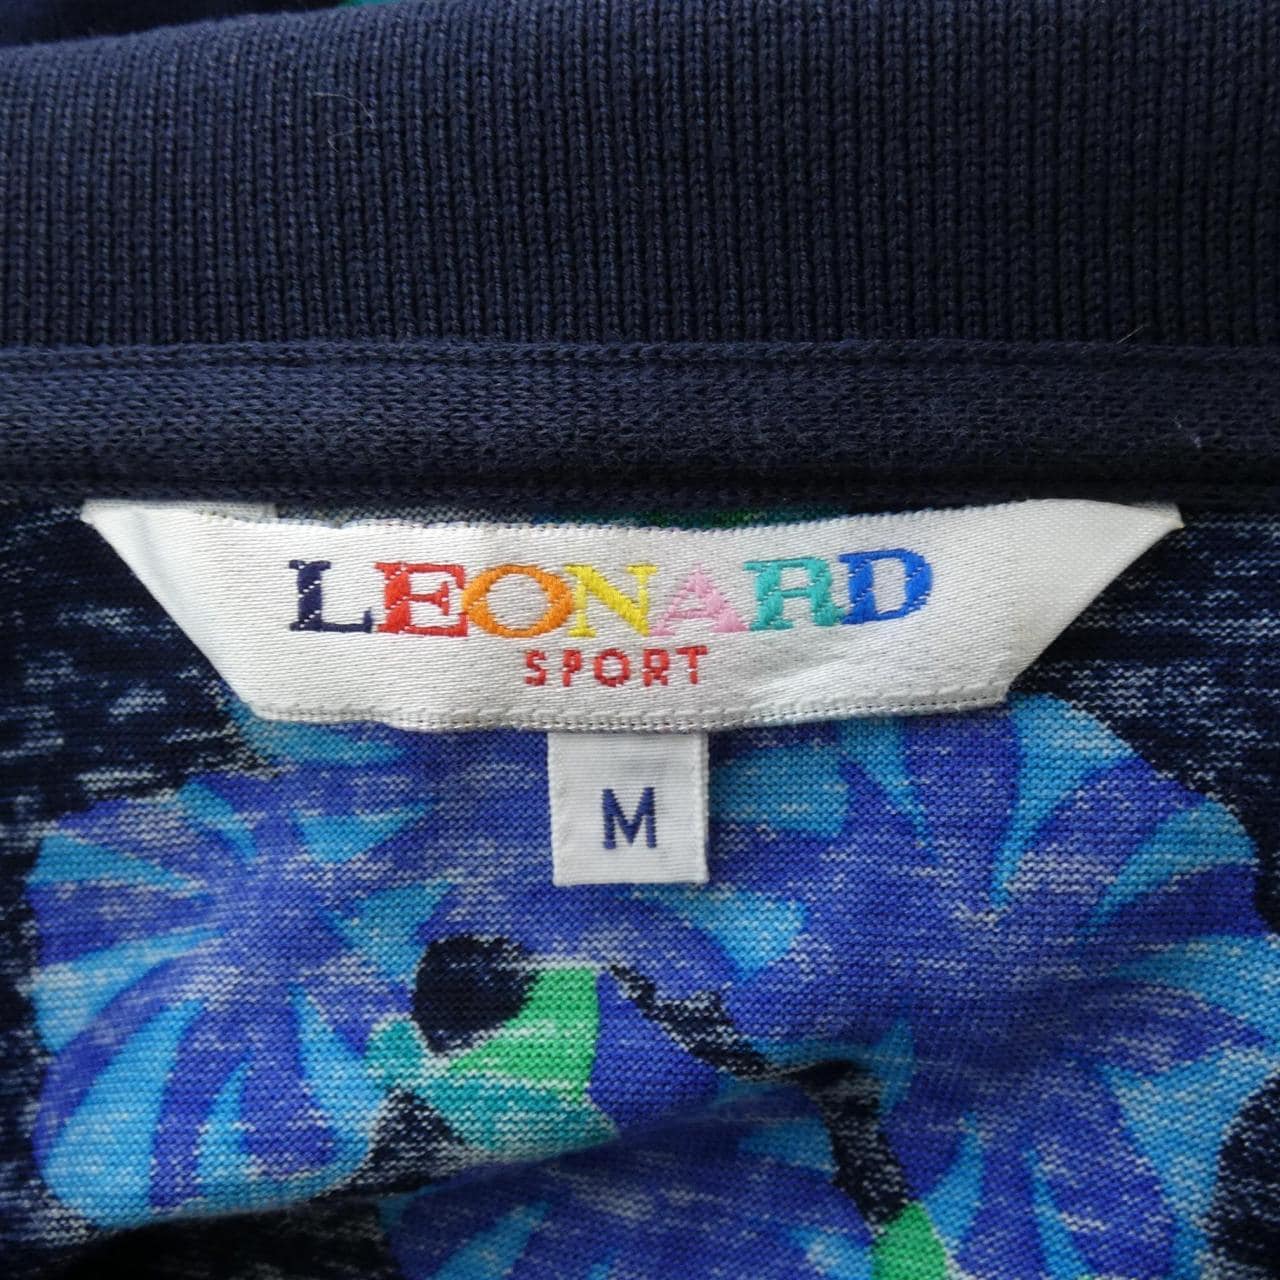 Leonard sports LEONARD SPORT polo shirt